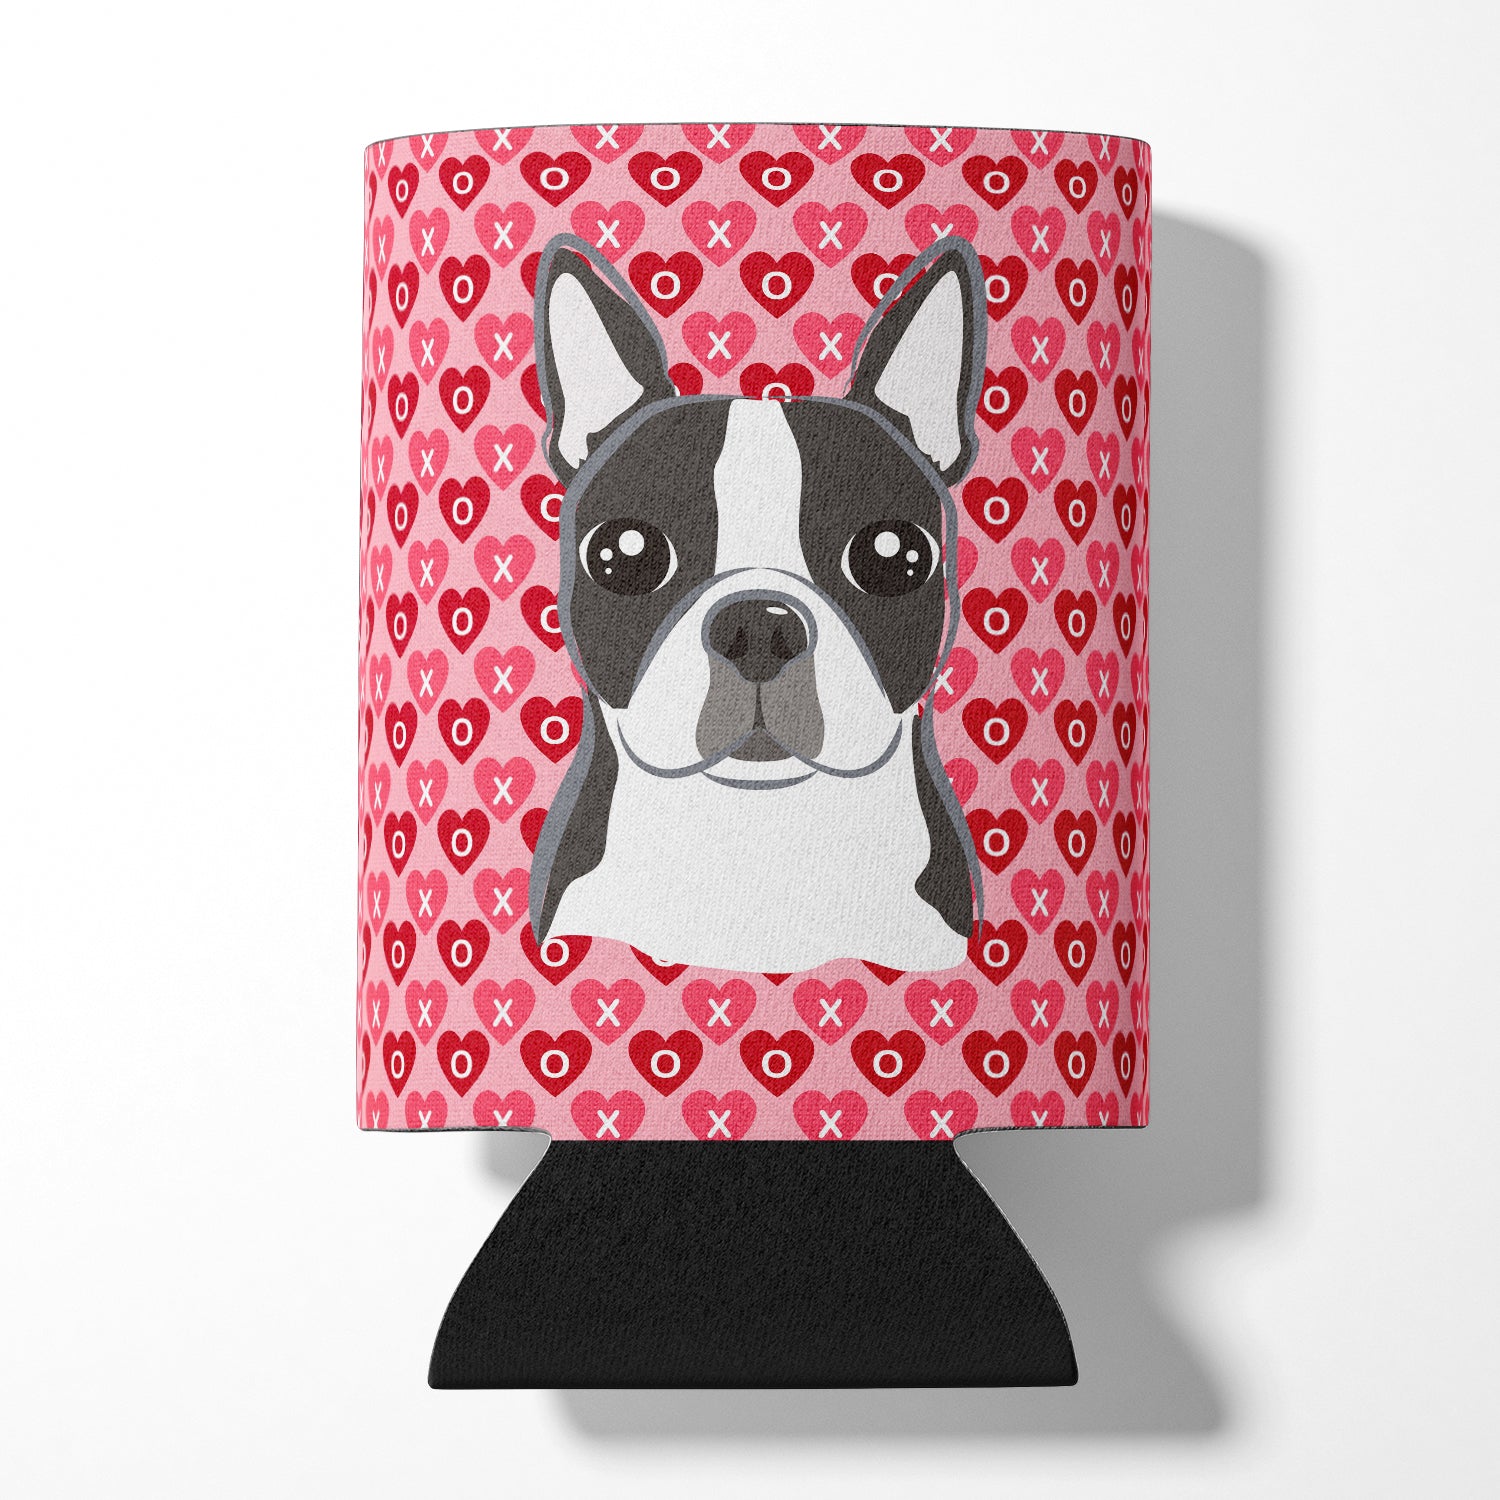 Boston Terrier Hearts Can or Bottle Hugger BB5273CC